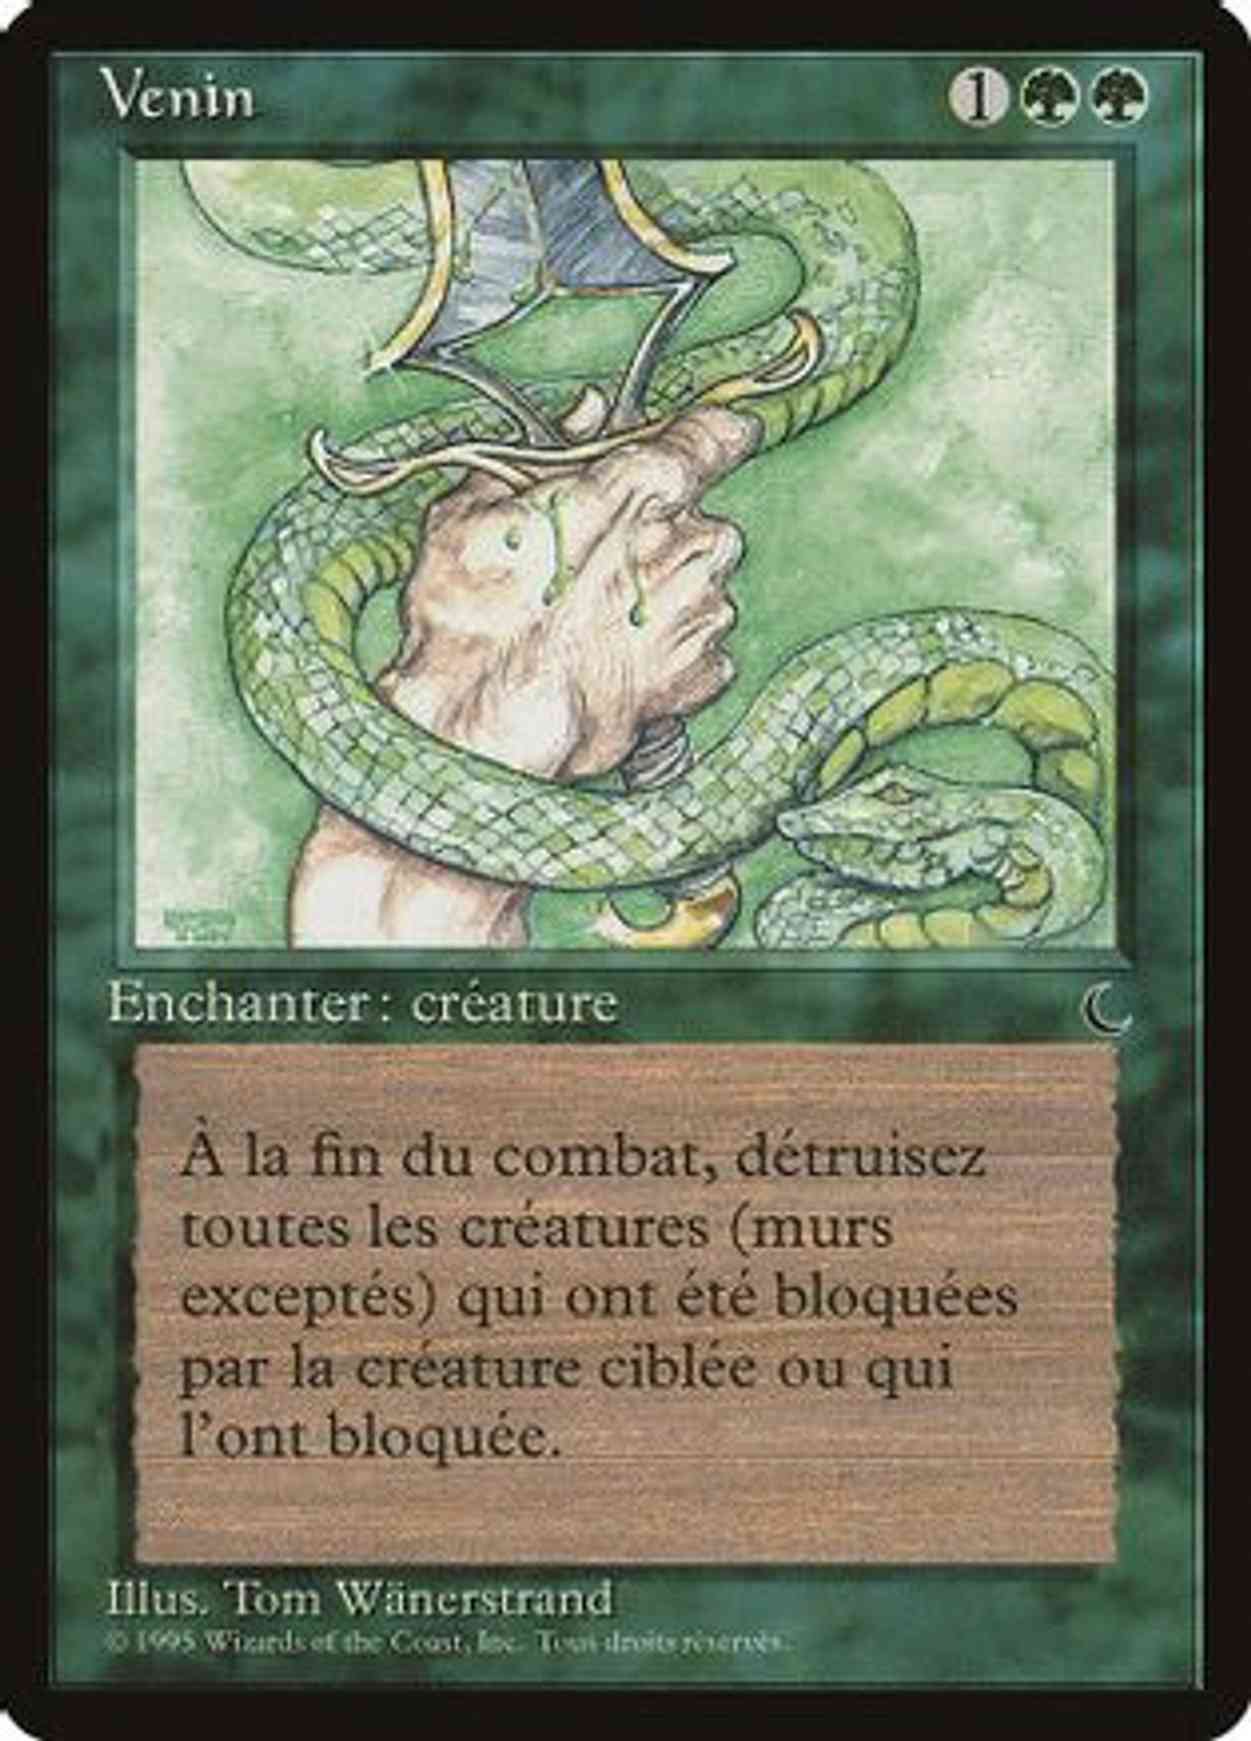 Venom (French) - "Venin" magic card front